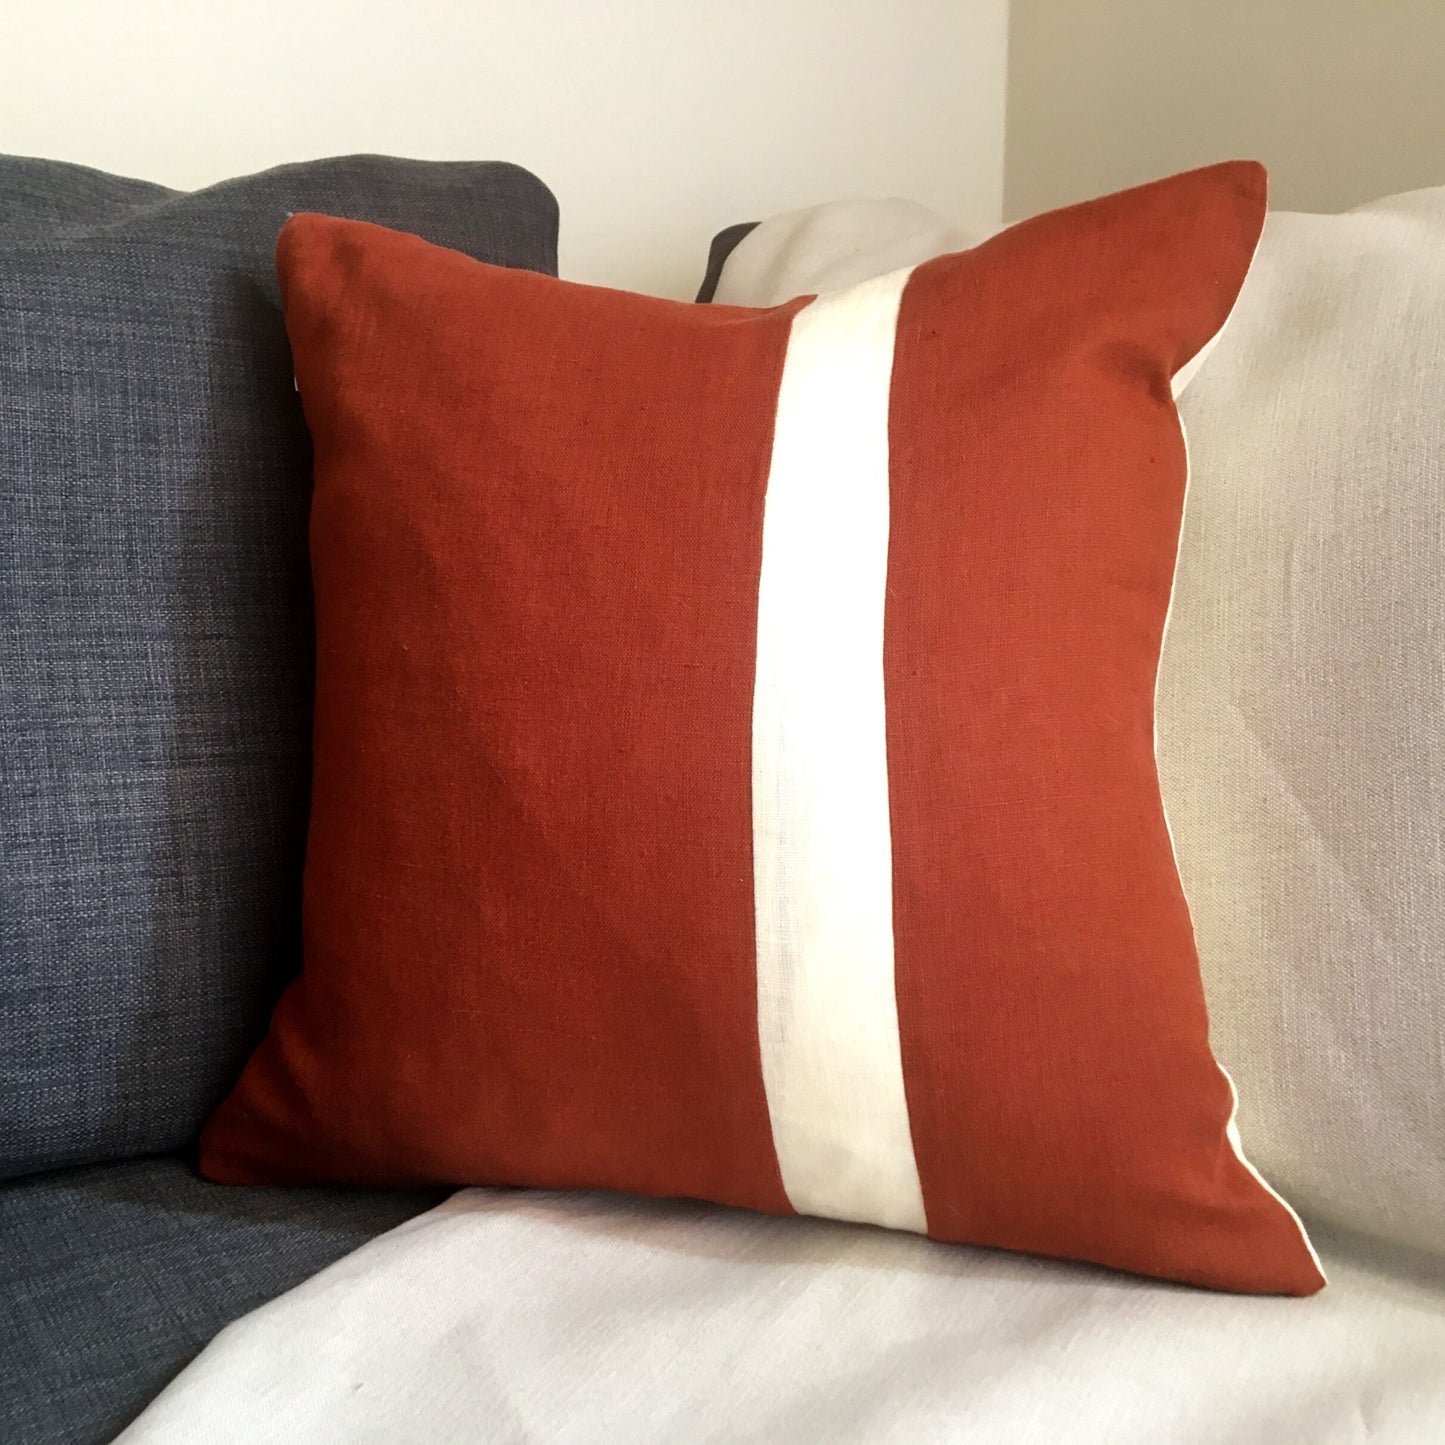 Red squirrel cushion stripe front on grey sofa